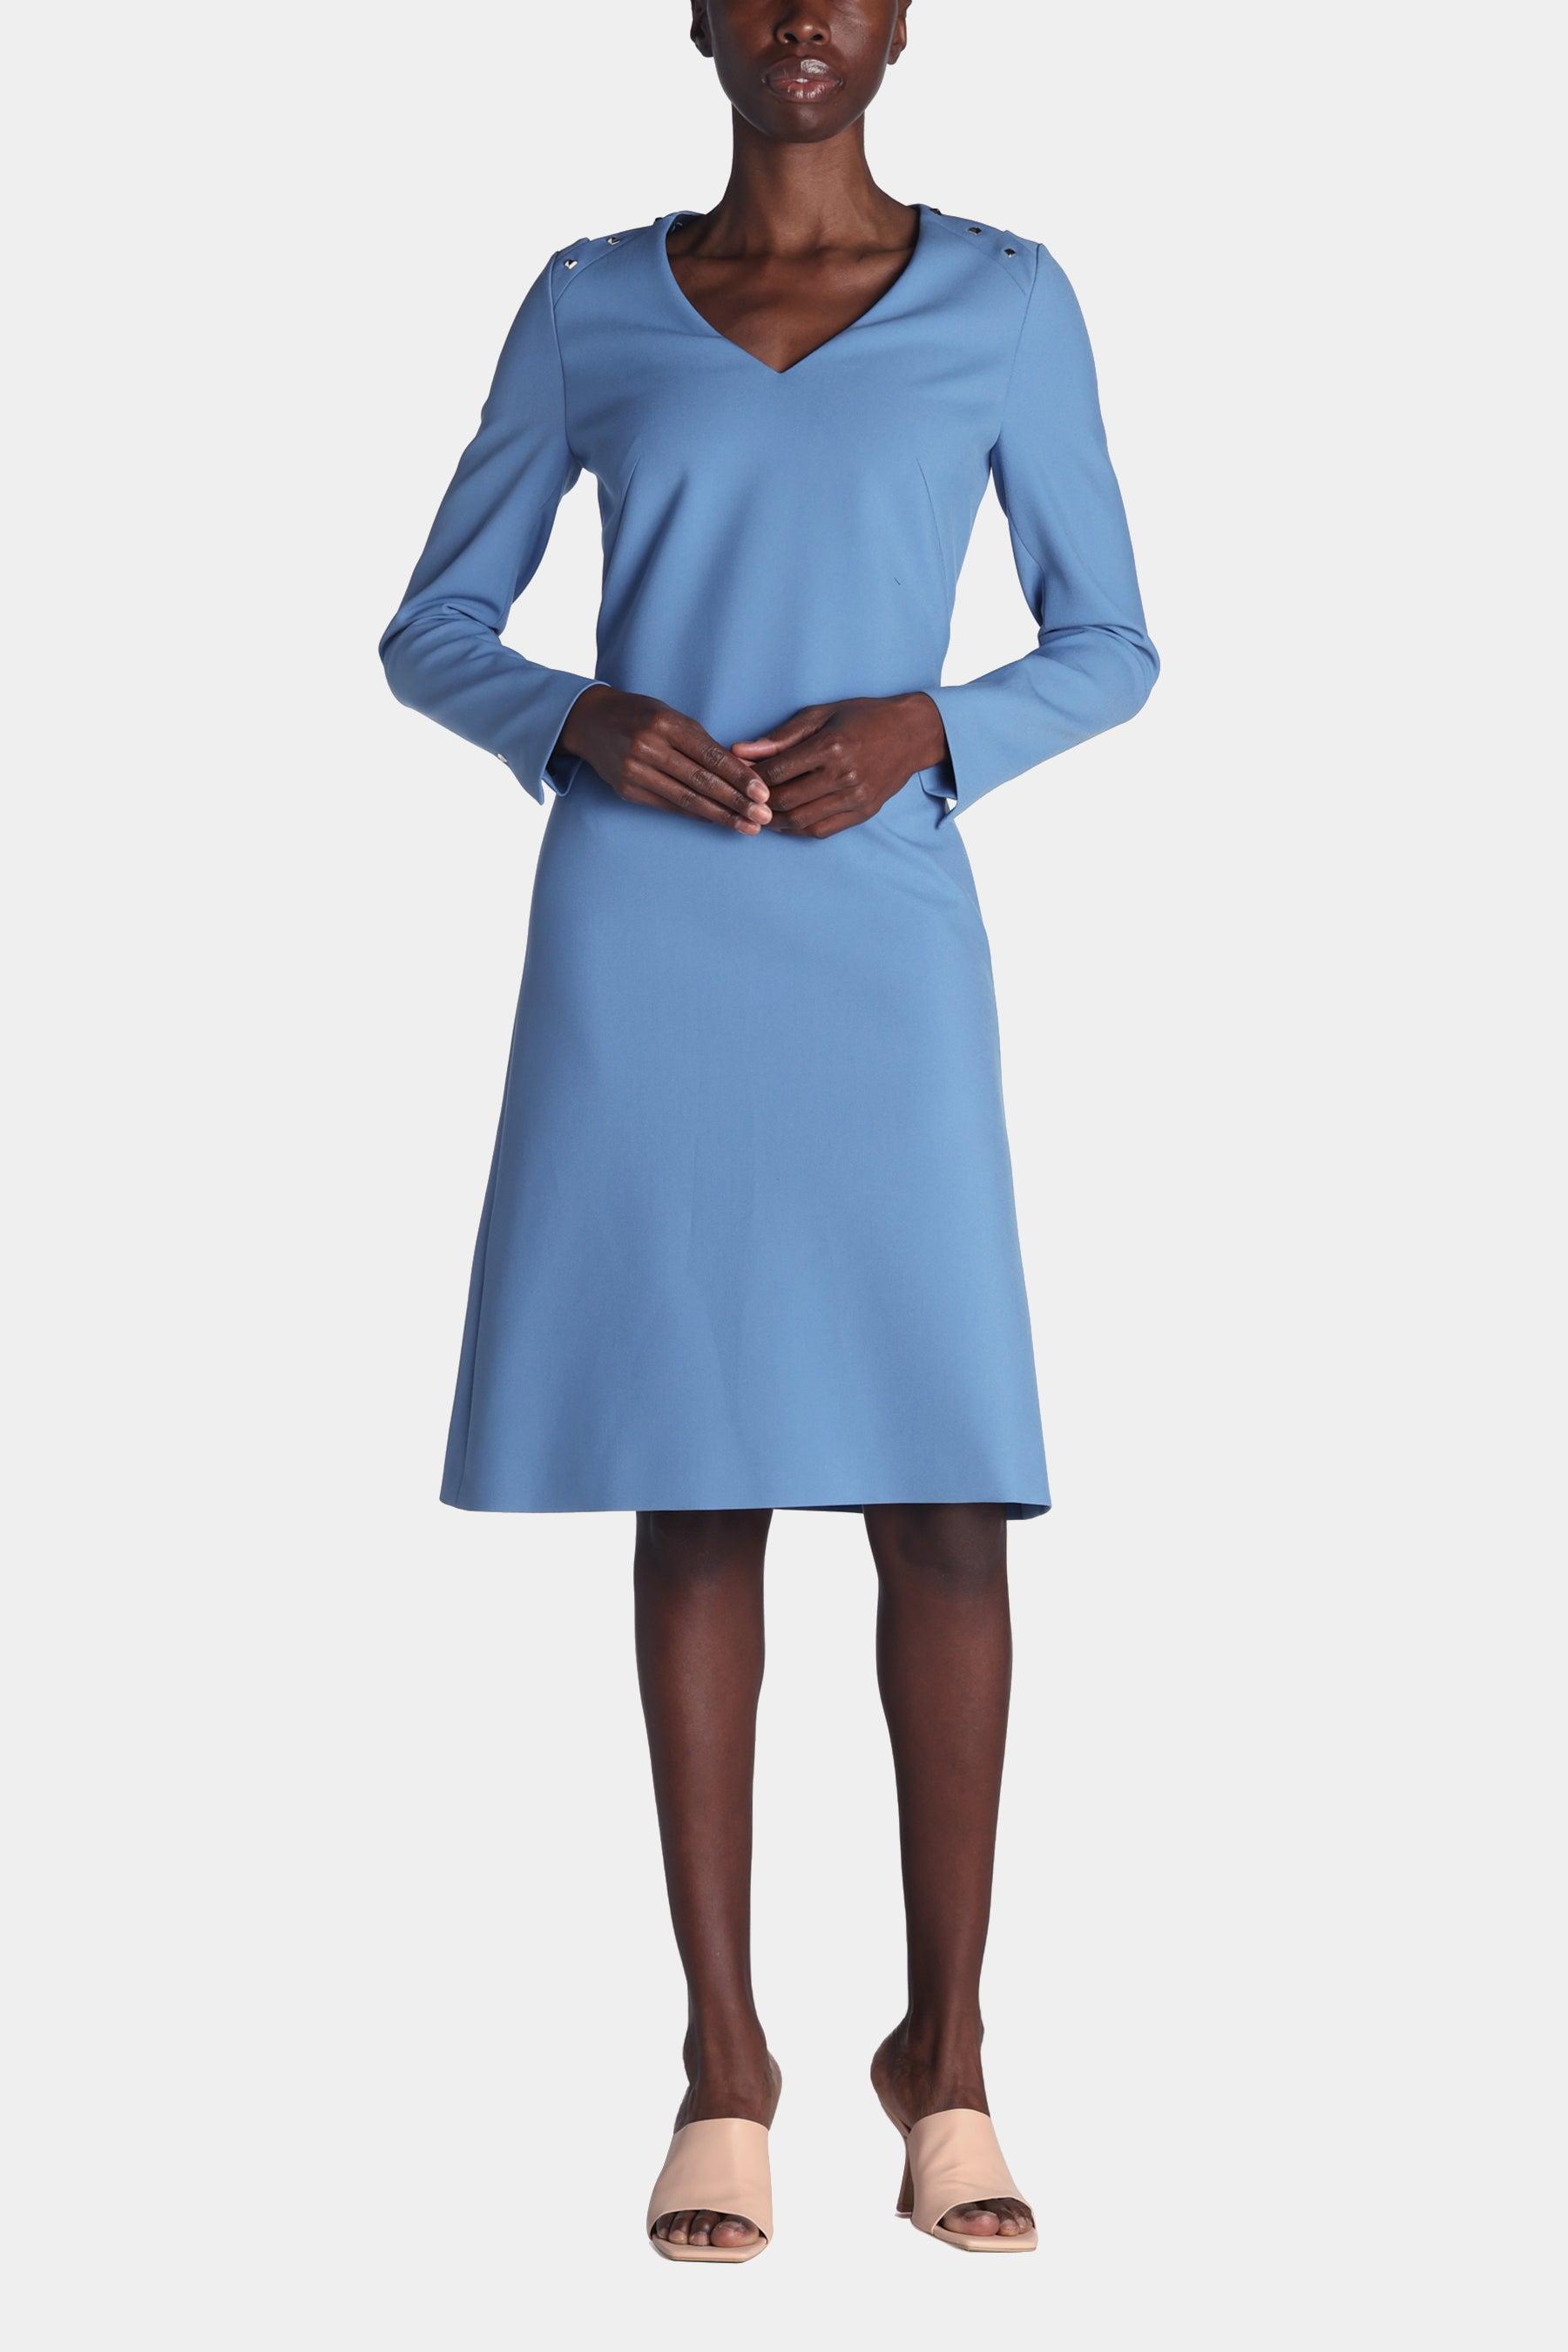 BOSS by HUGO BOSS Dariva Long Sleeve Studded Dress in Blue | Lyst